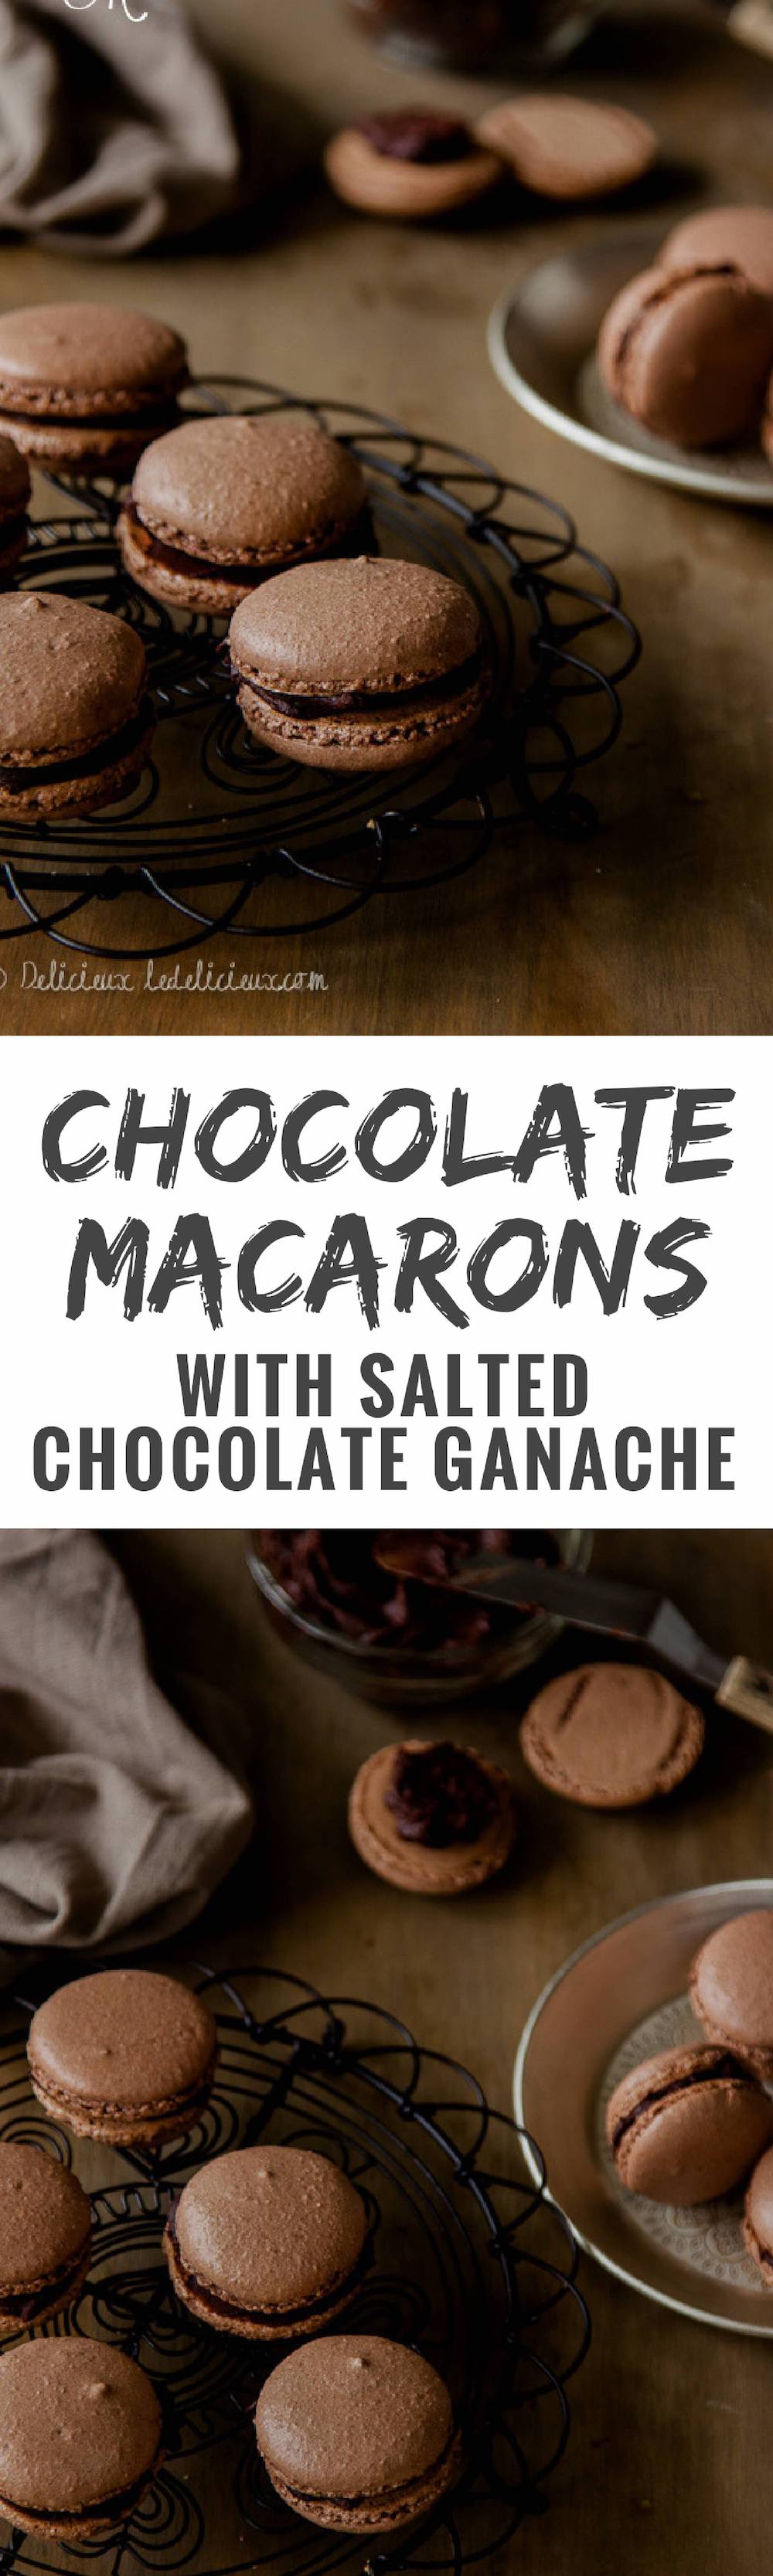 How to make chocolate macarons with salted chocolate ganache